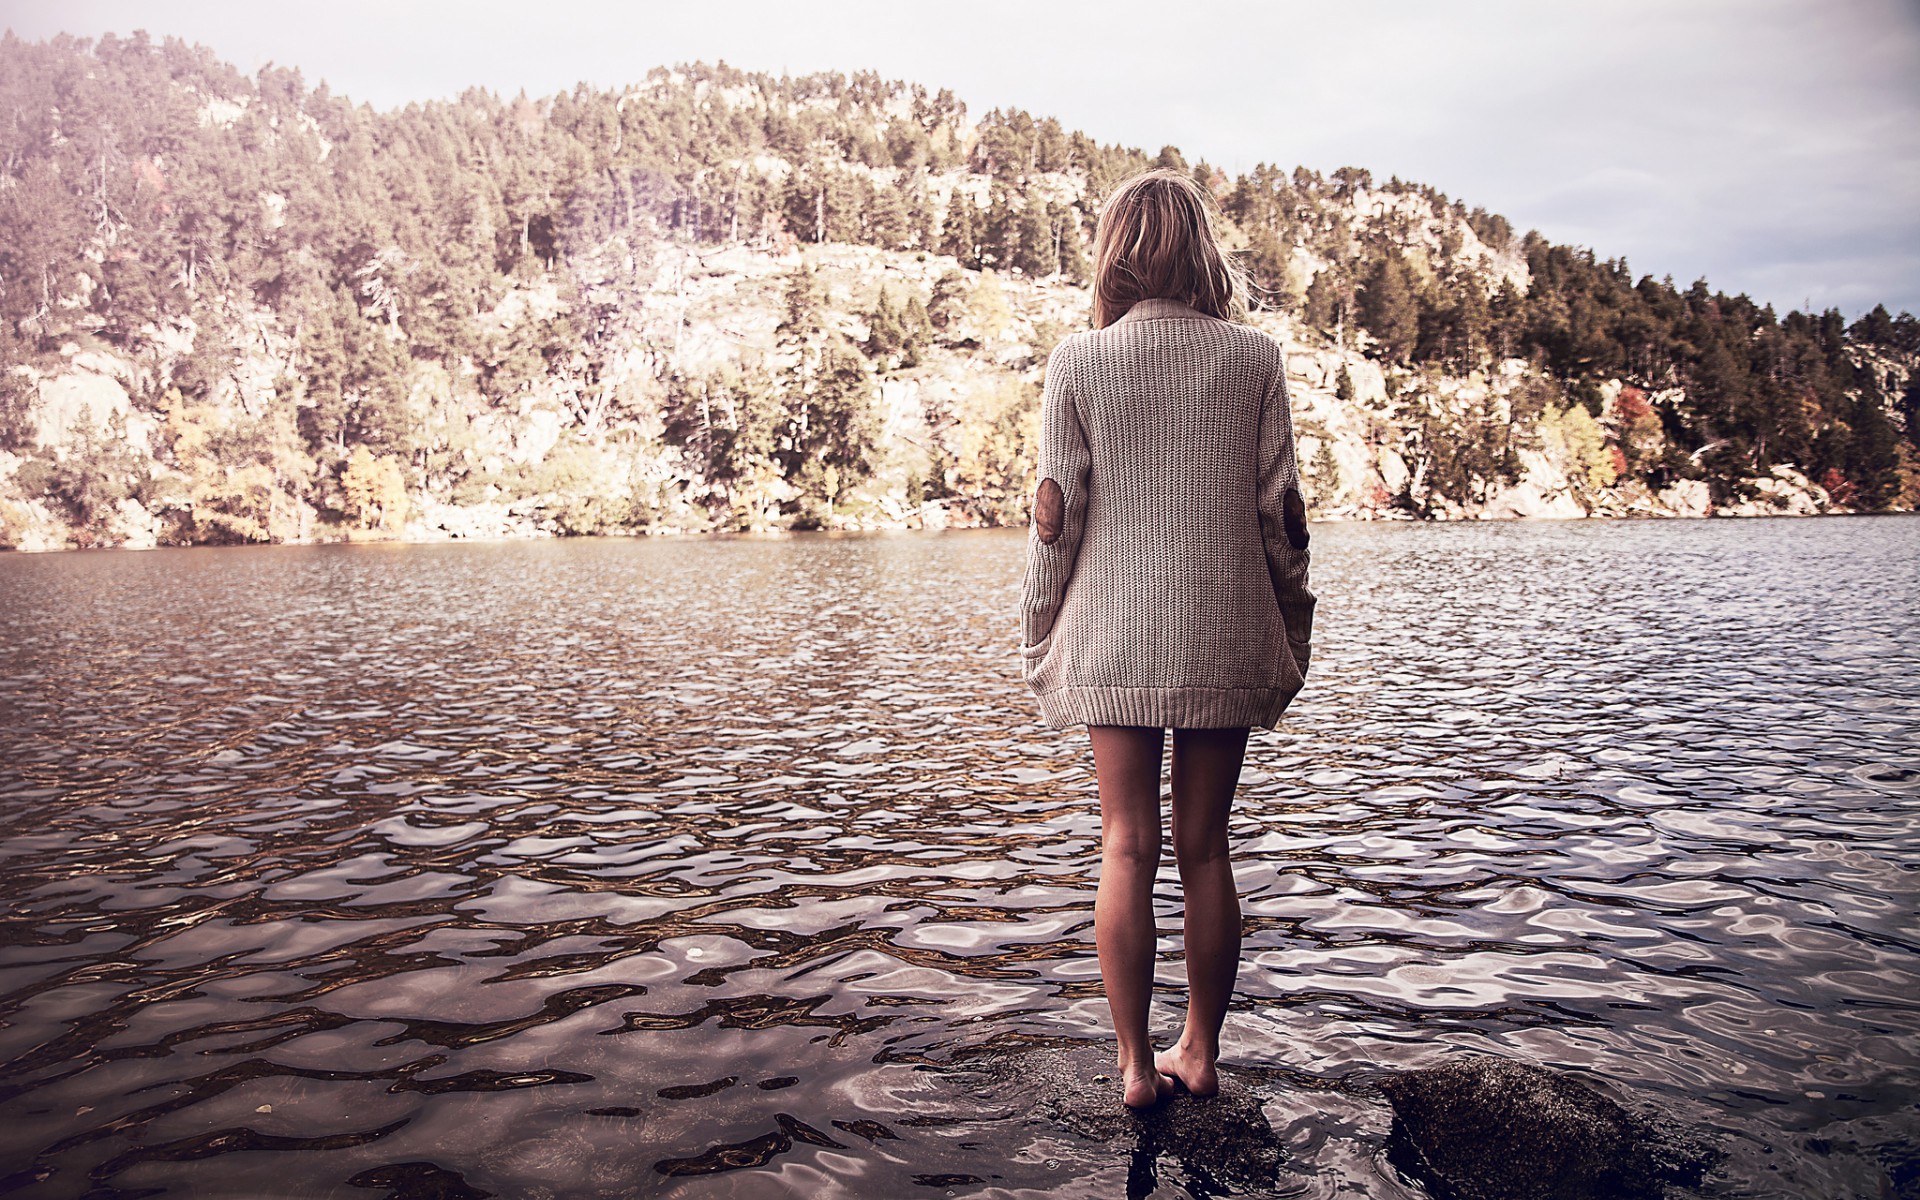 women outdoors lake hill sweater dress barefoot ripples back blonde Wallpaper